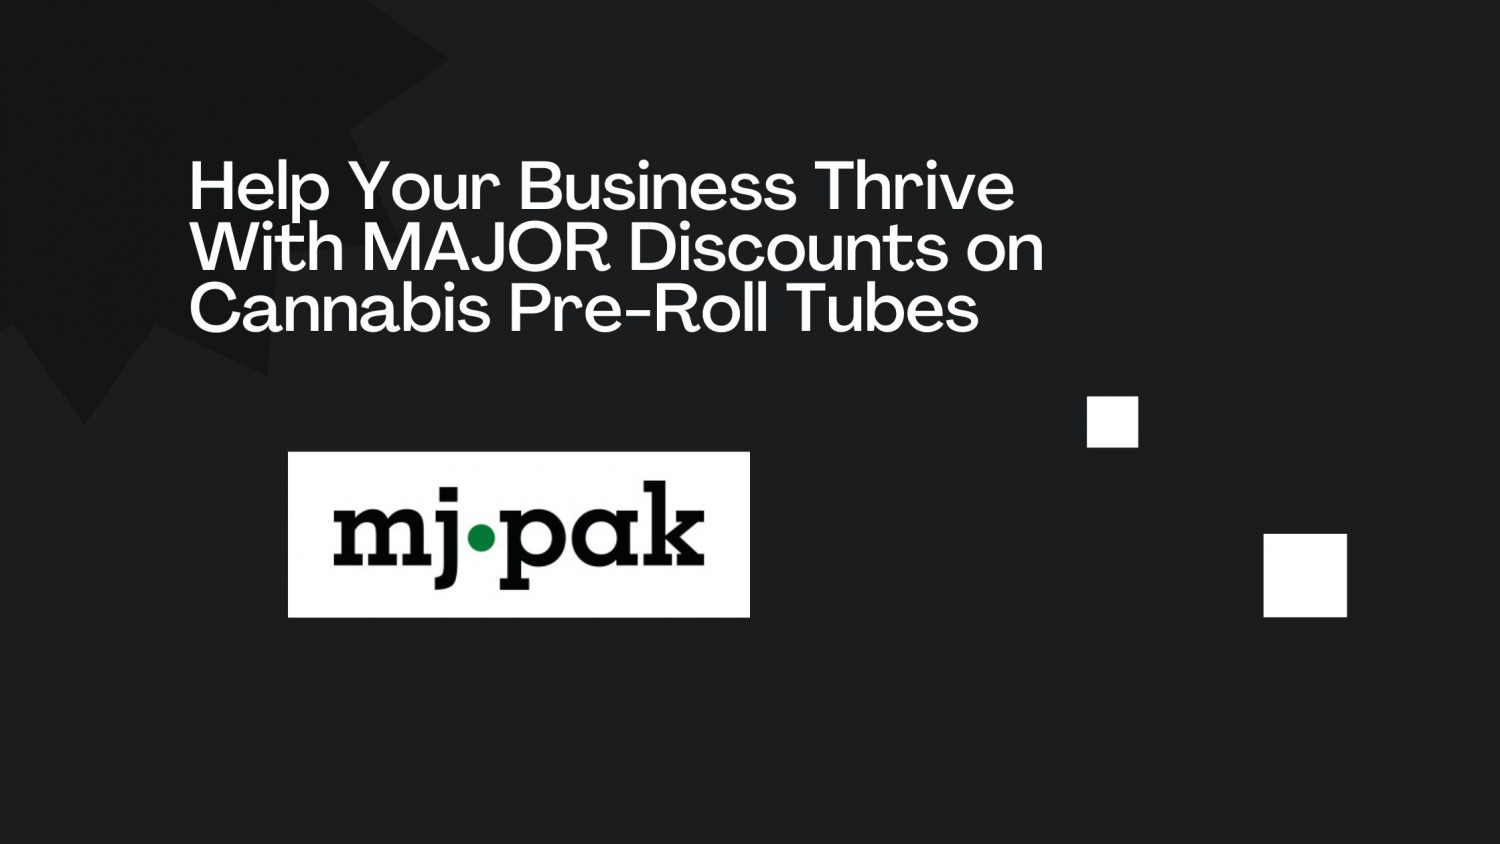 California's MJ-Pak Offering Major Deals On Cannabis Pre-Roll Tube Packaging ($0.042 Per Tube)